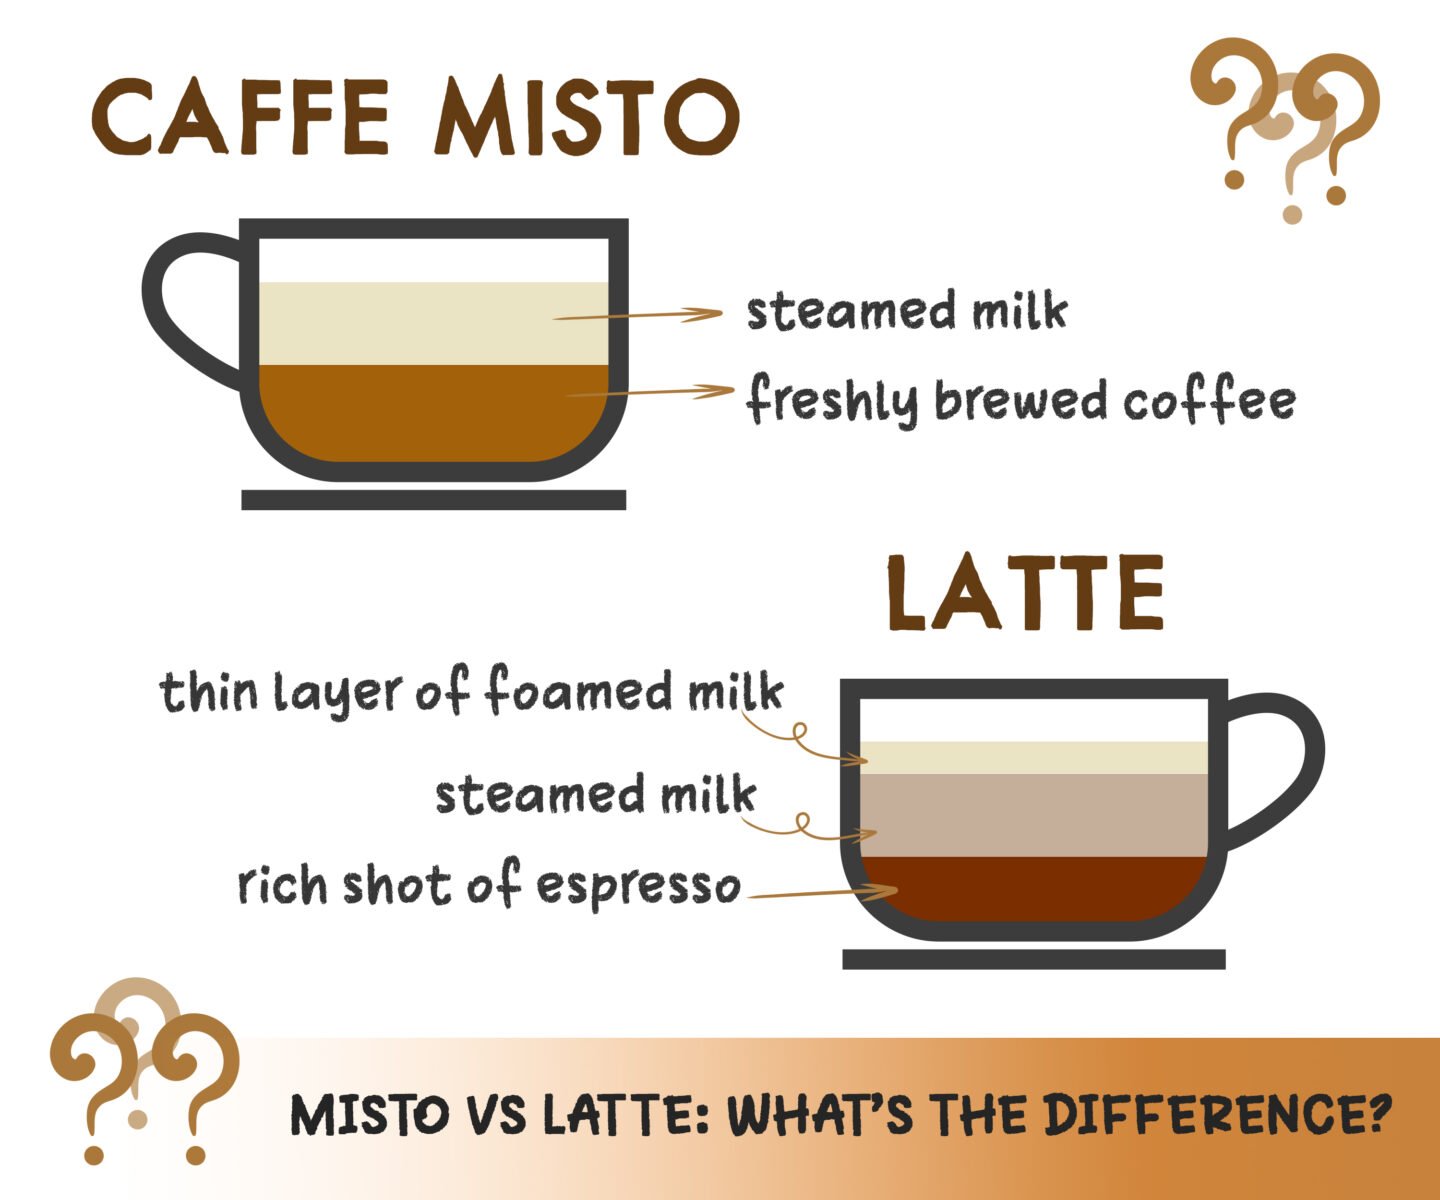 caffe misto vs latte difference